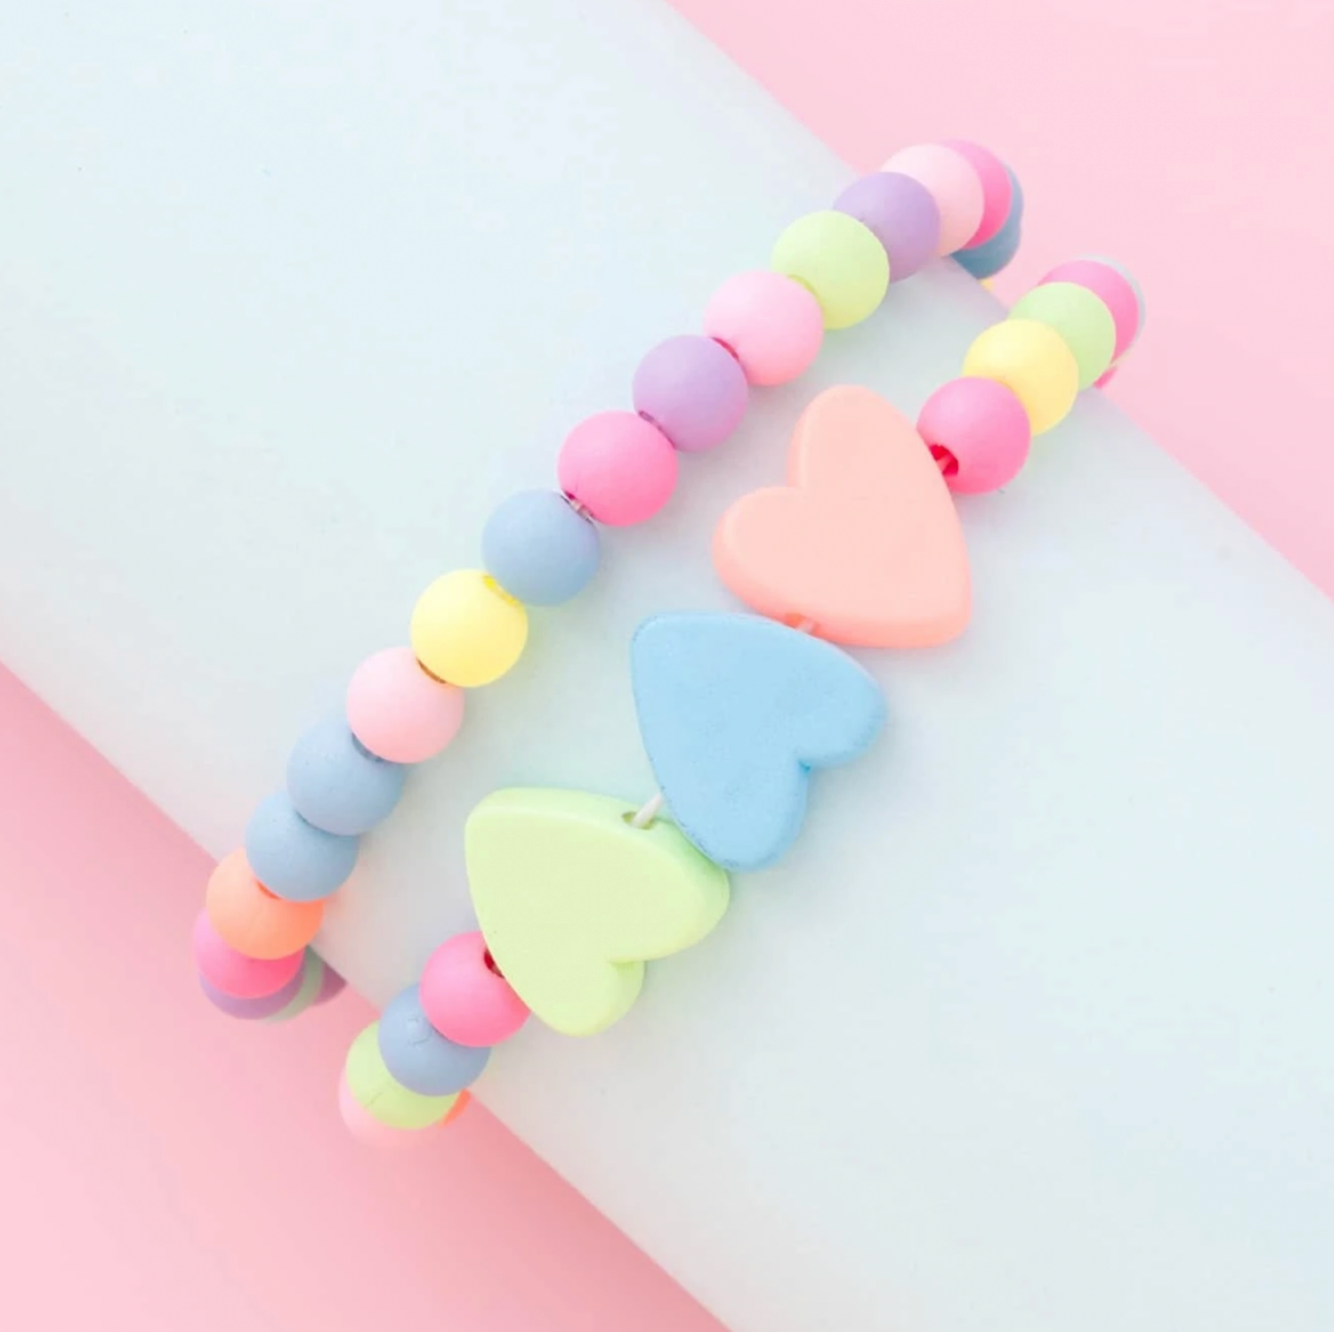 Candy Heart | Beaded Bracelet